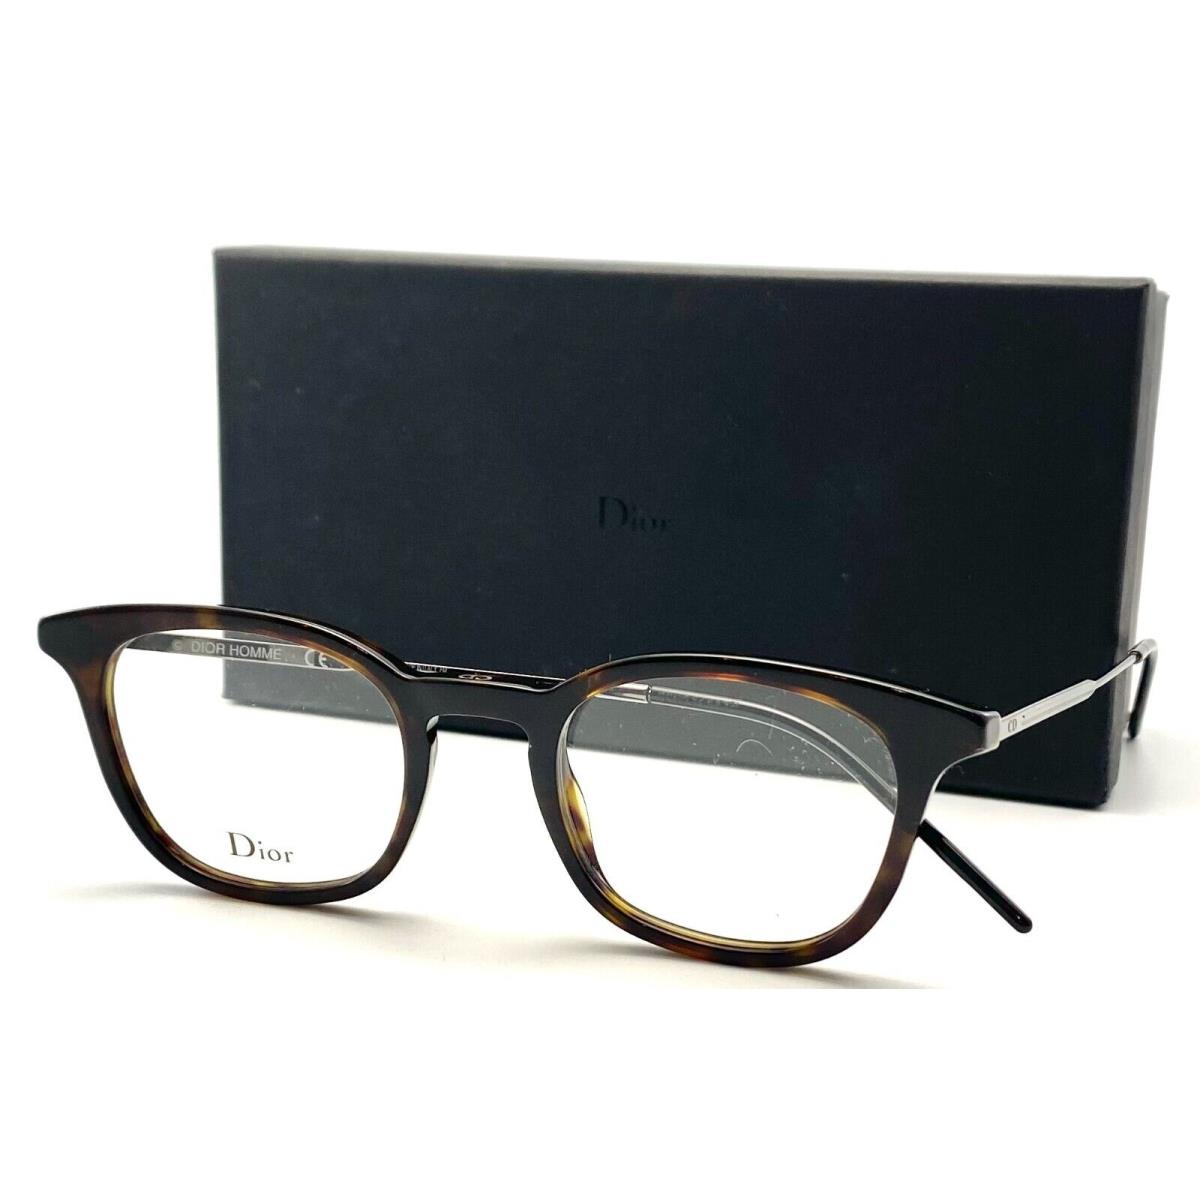 Dior BLACKTIE231 Nfq Havana Ruthen Eyeglasses Frame 48-22 150